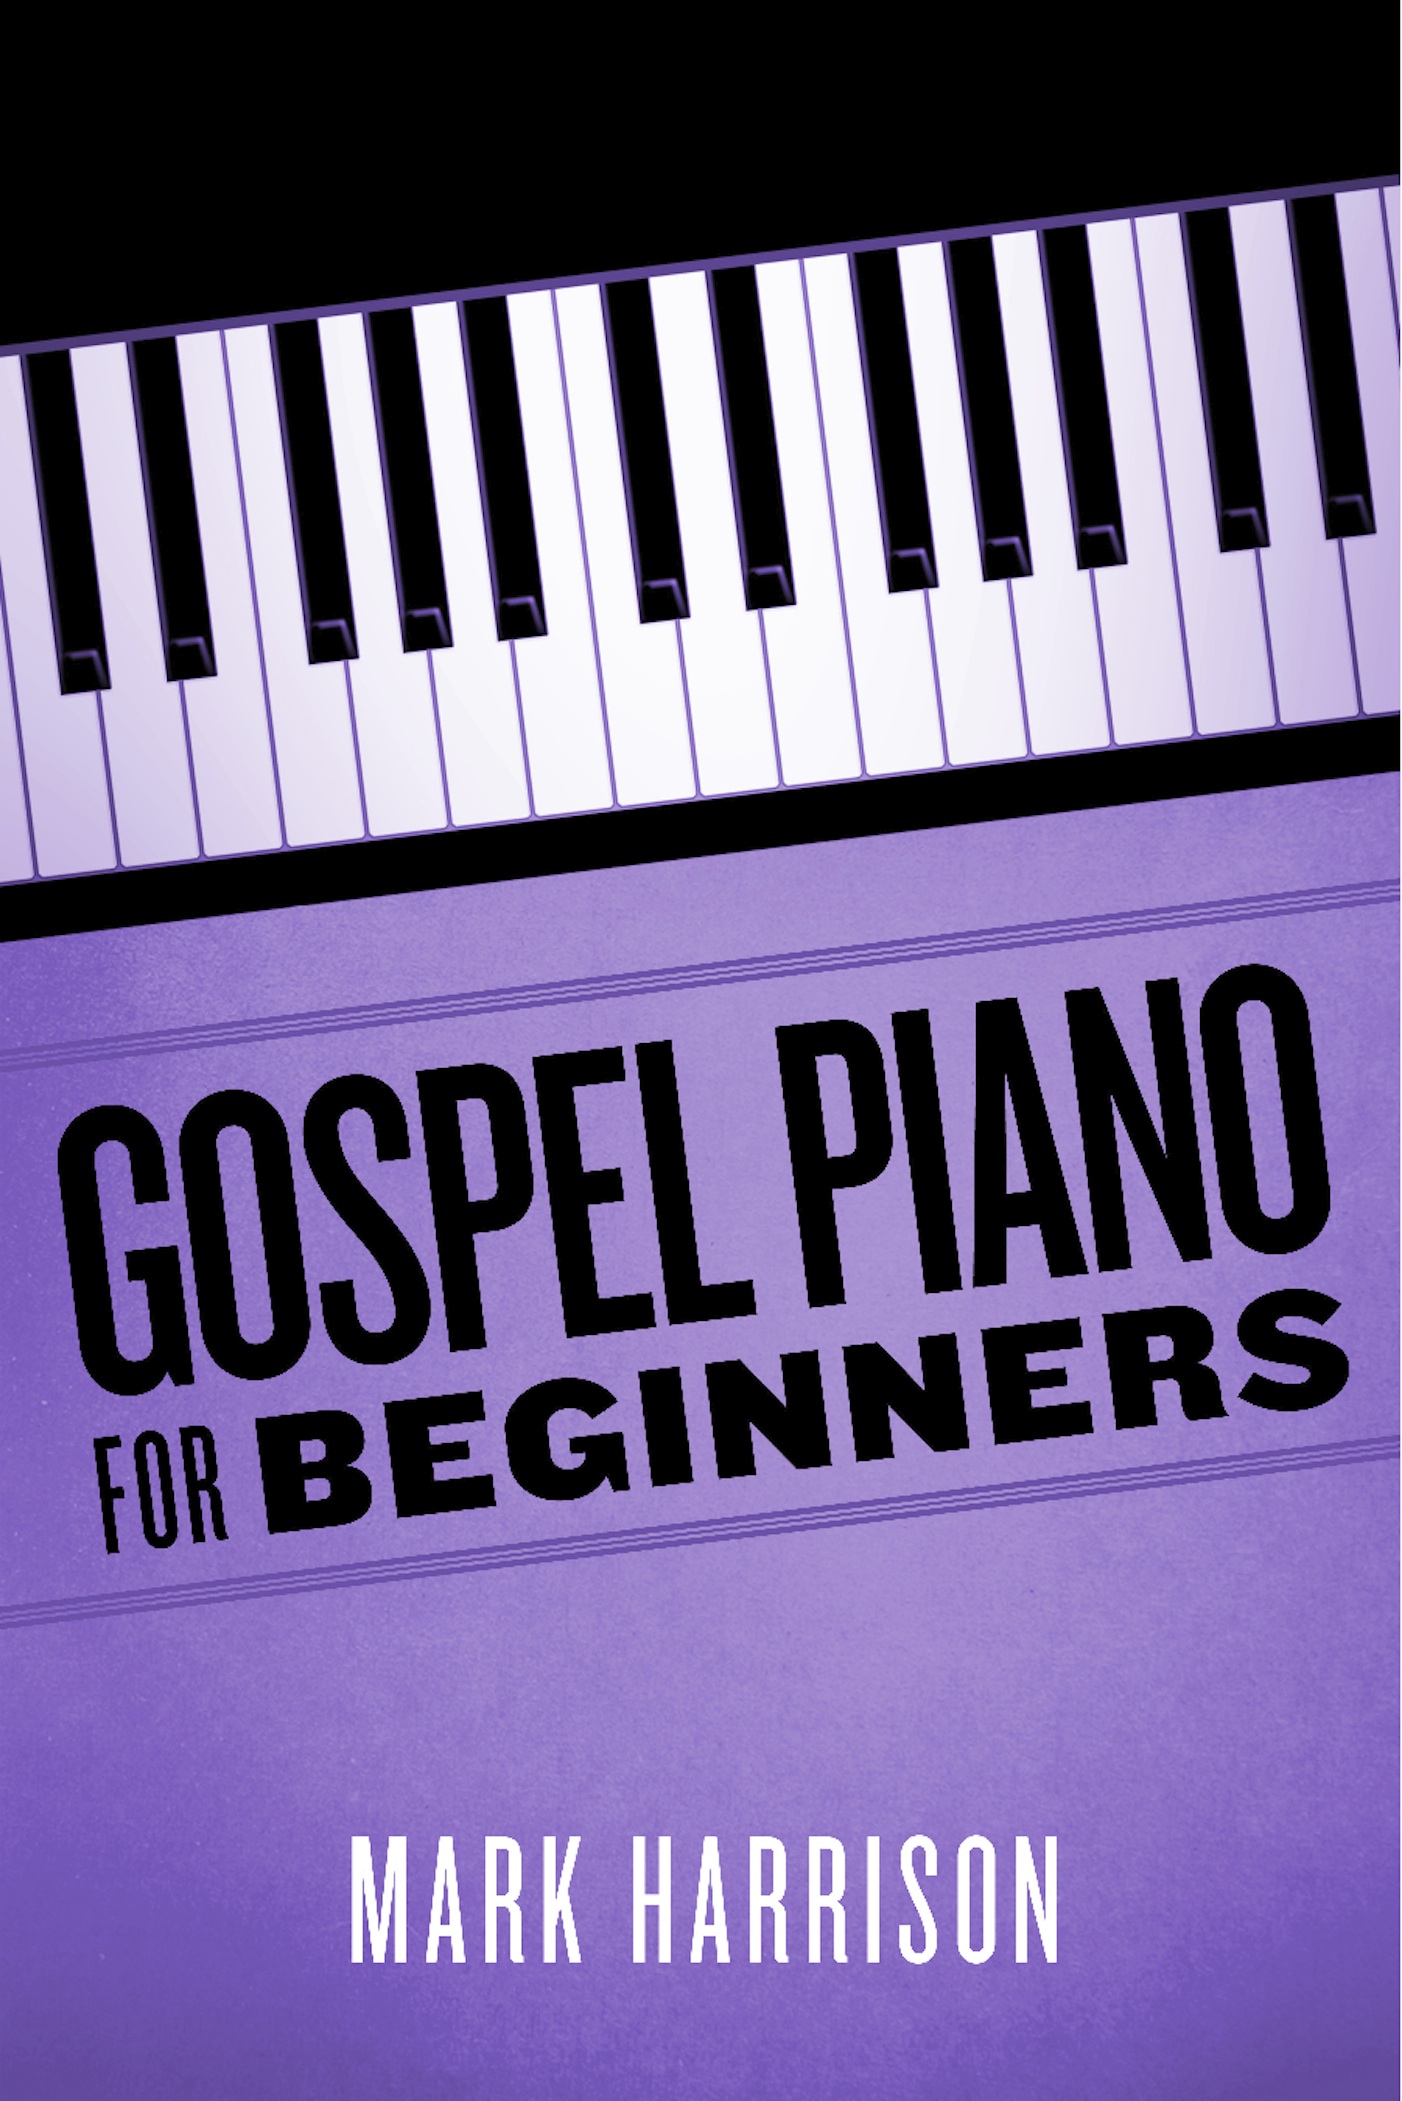 Read Gospel Piano For Beginners Online by Mark Harrison | Books | Free